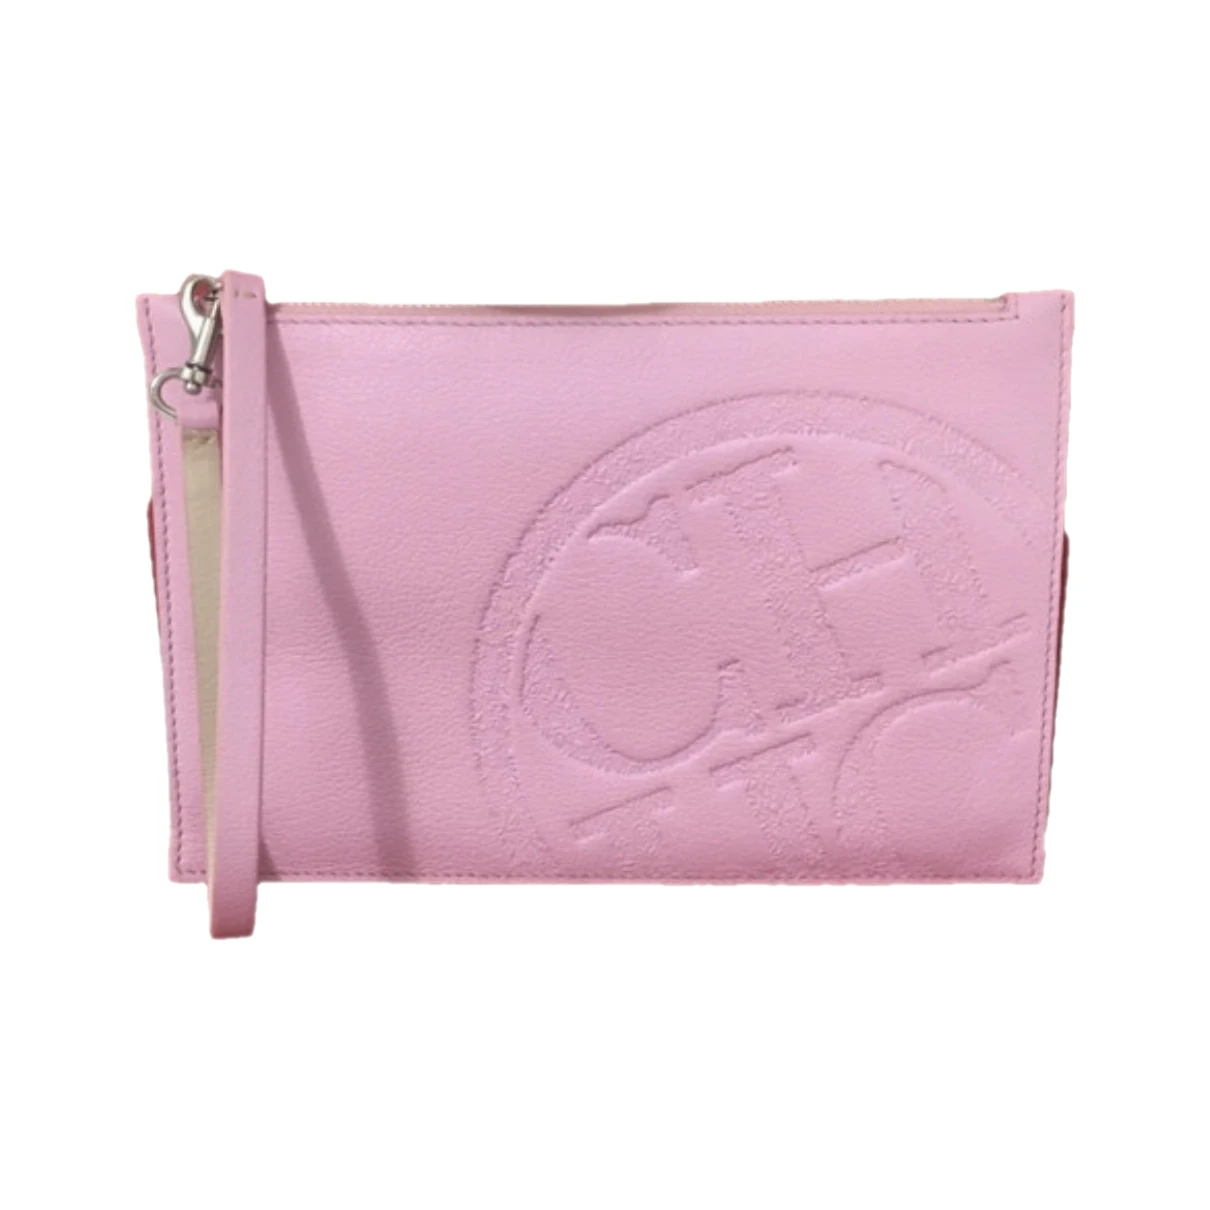 Pre-owned Carolina Herrera Leather Handbag In Pink